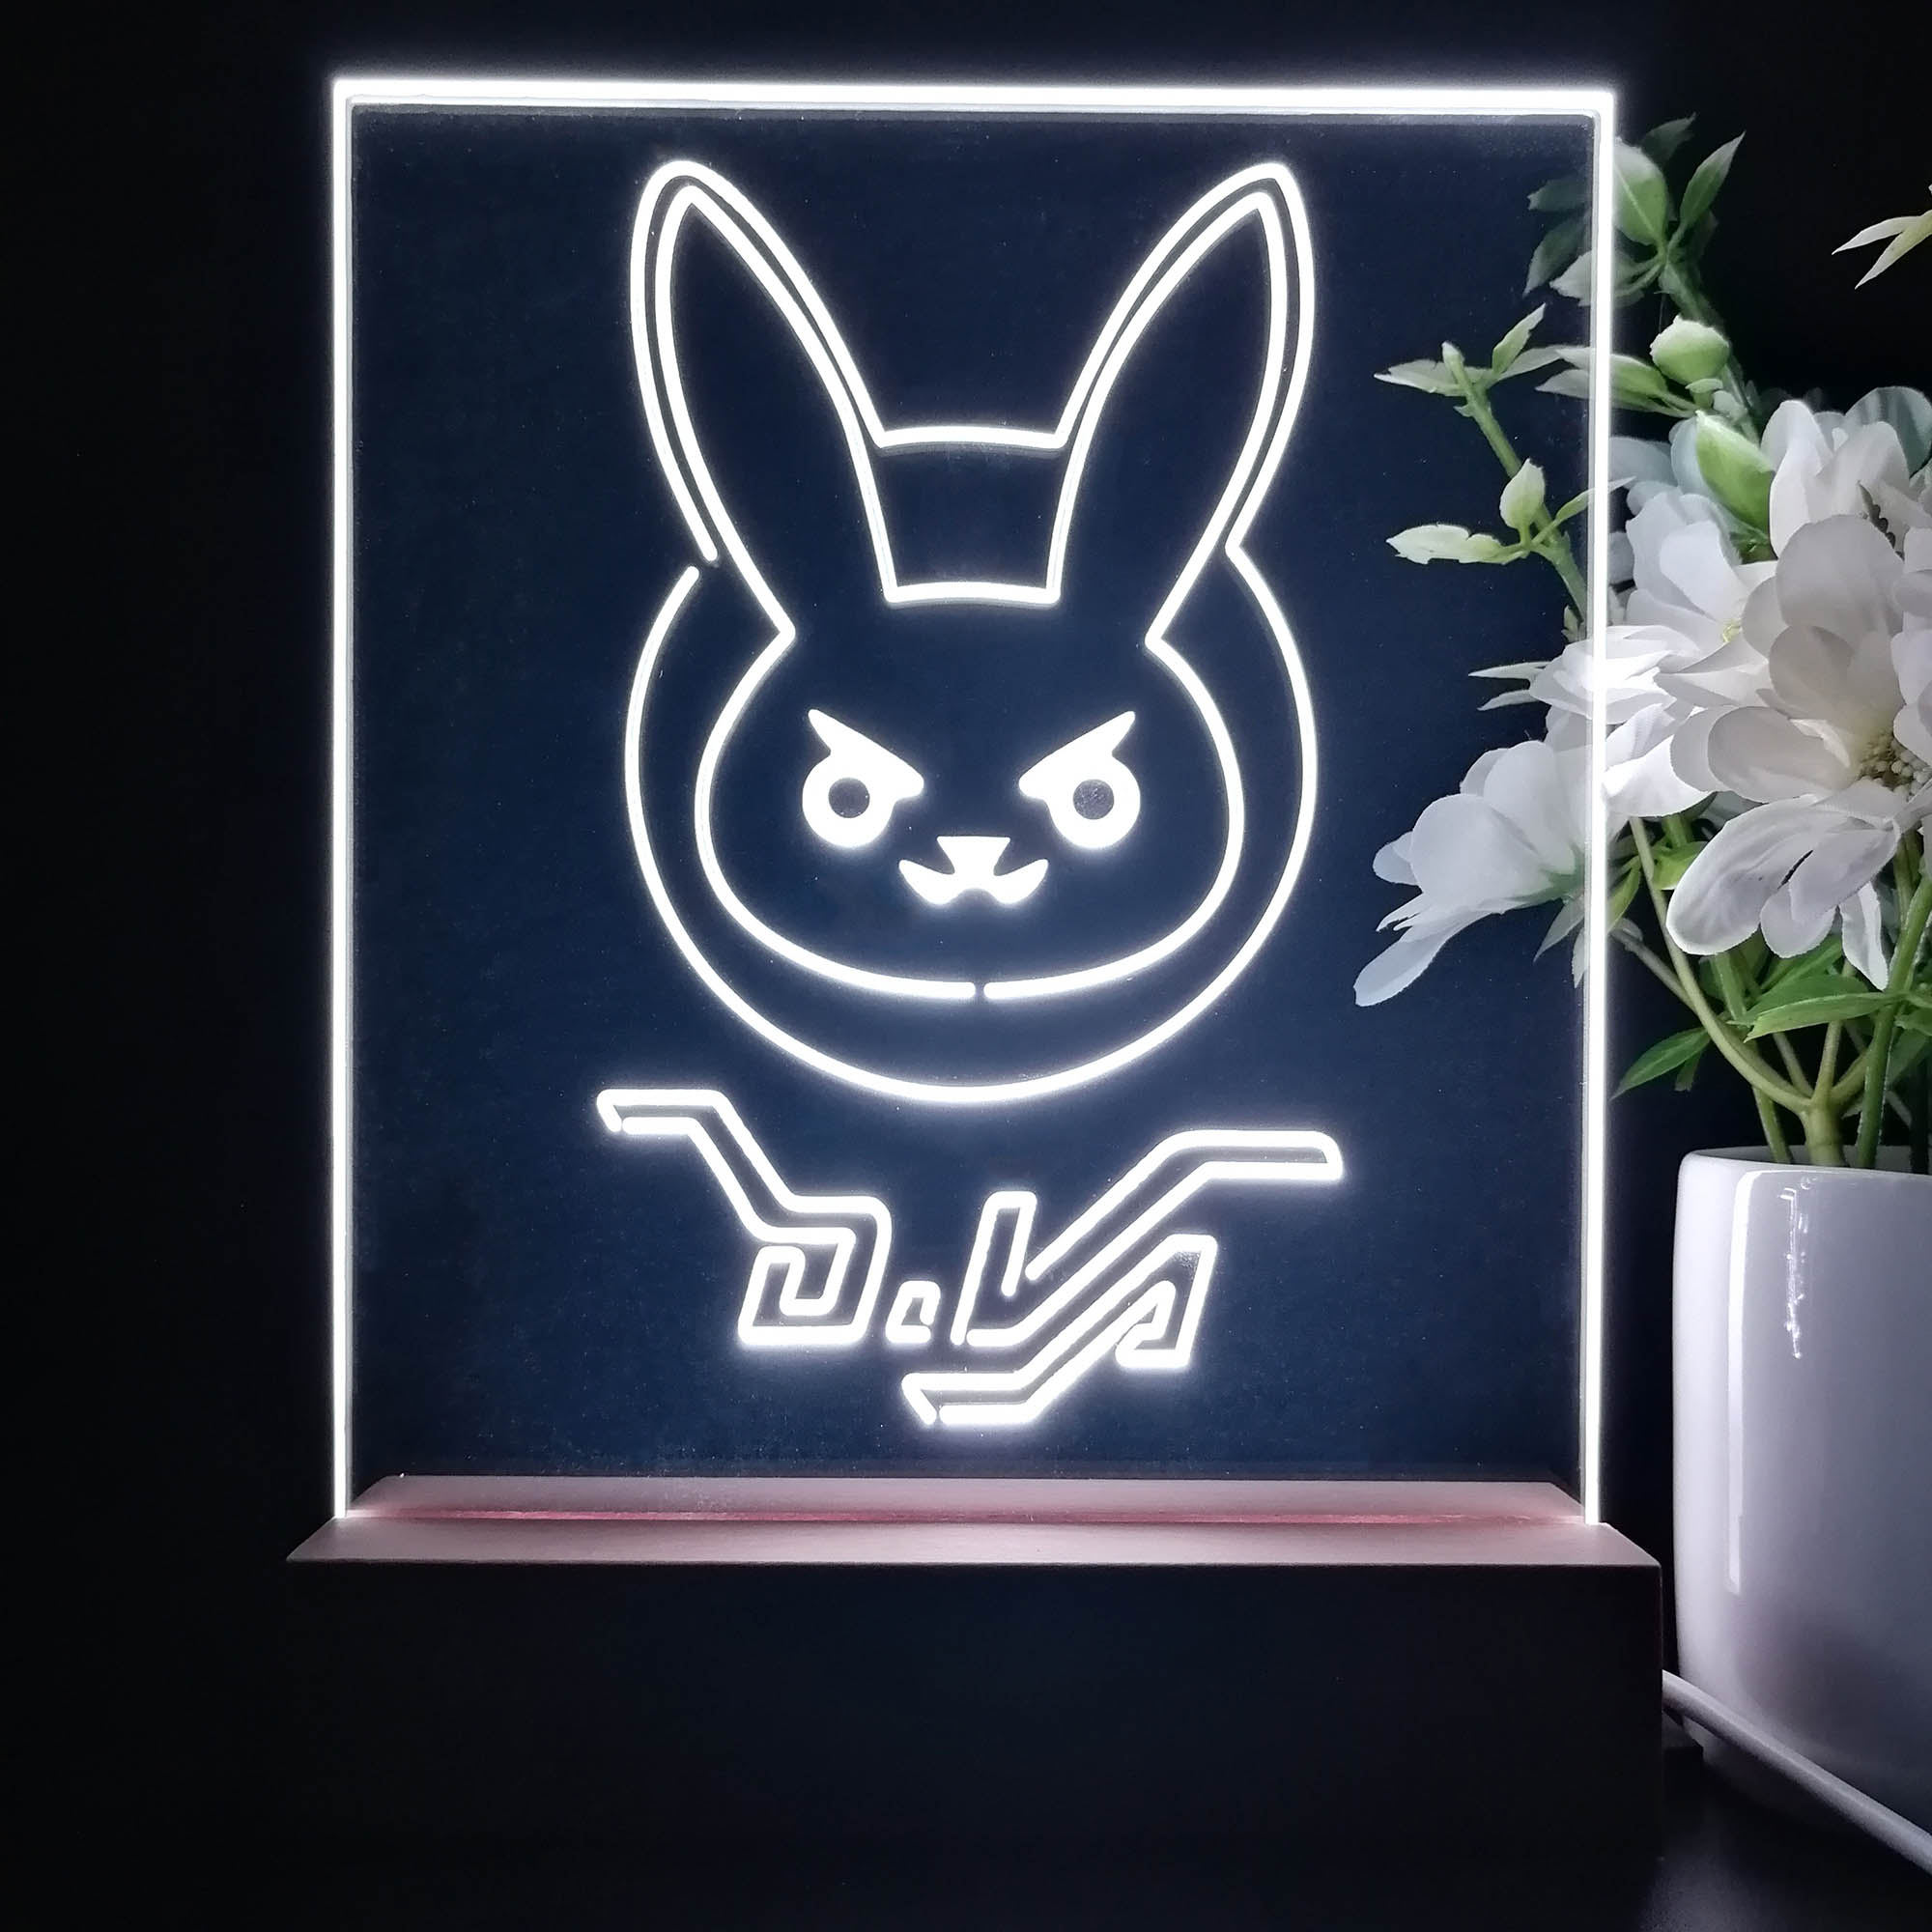 Overwatch Dva Game Room LED Sign Lamp Display